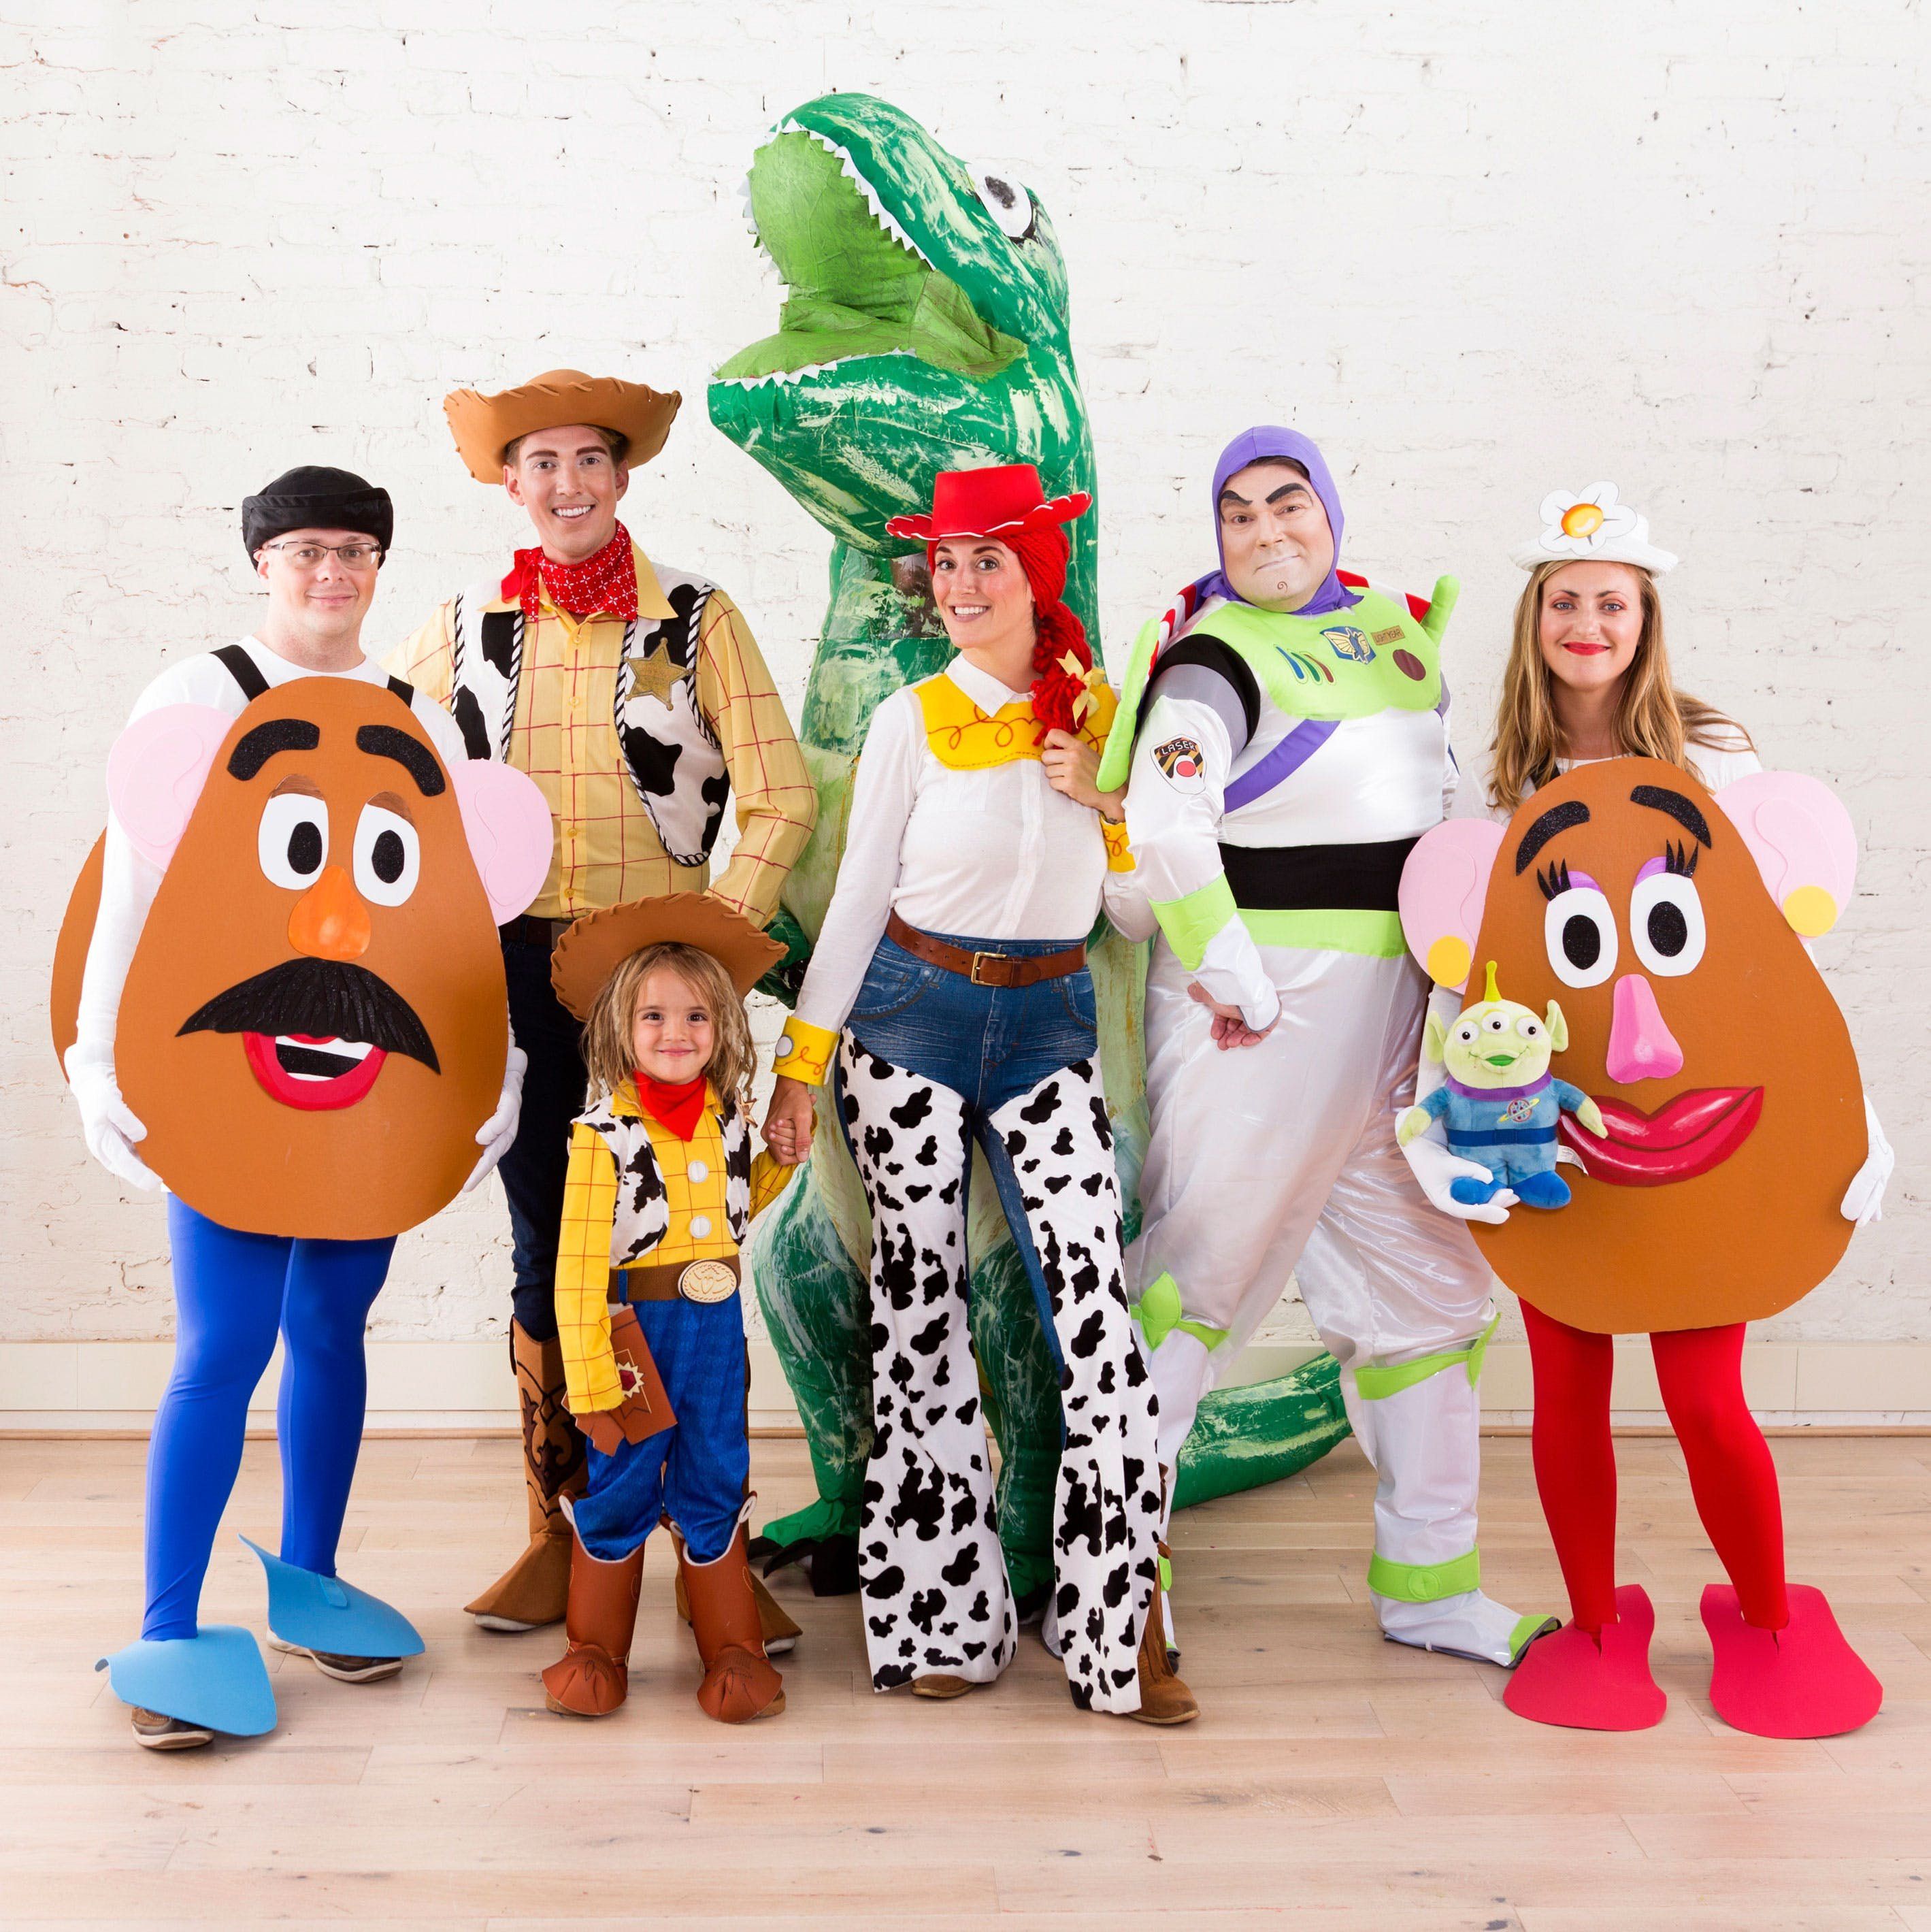 Adult Mr. Potato Head Costume Accessory Kit - Toy Story 4